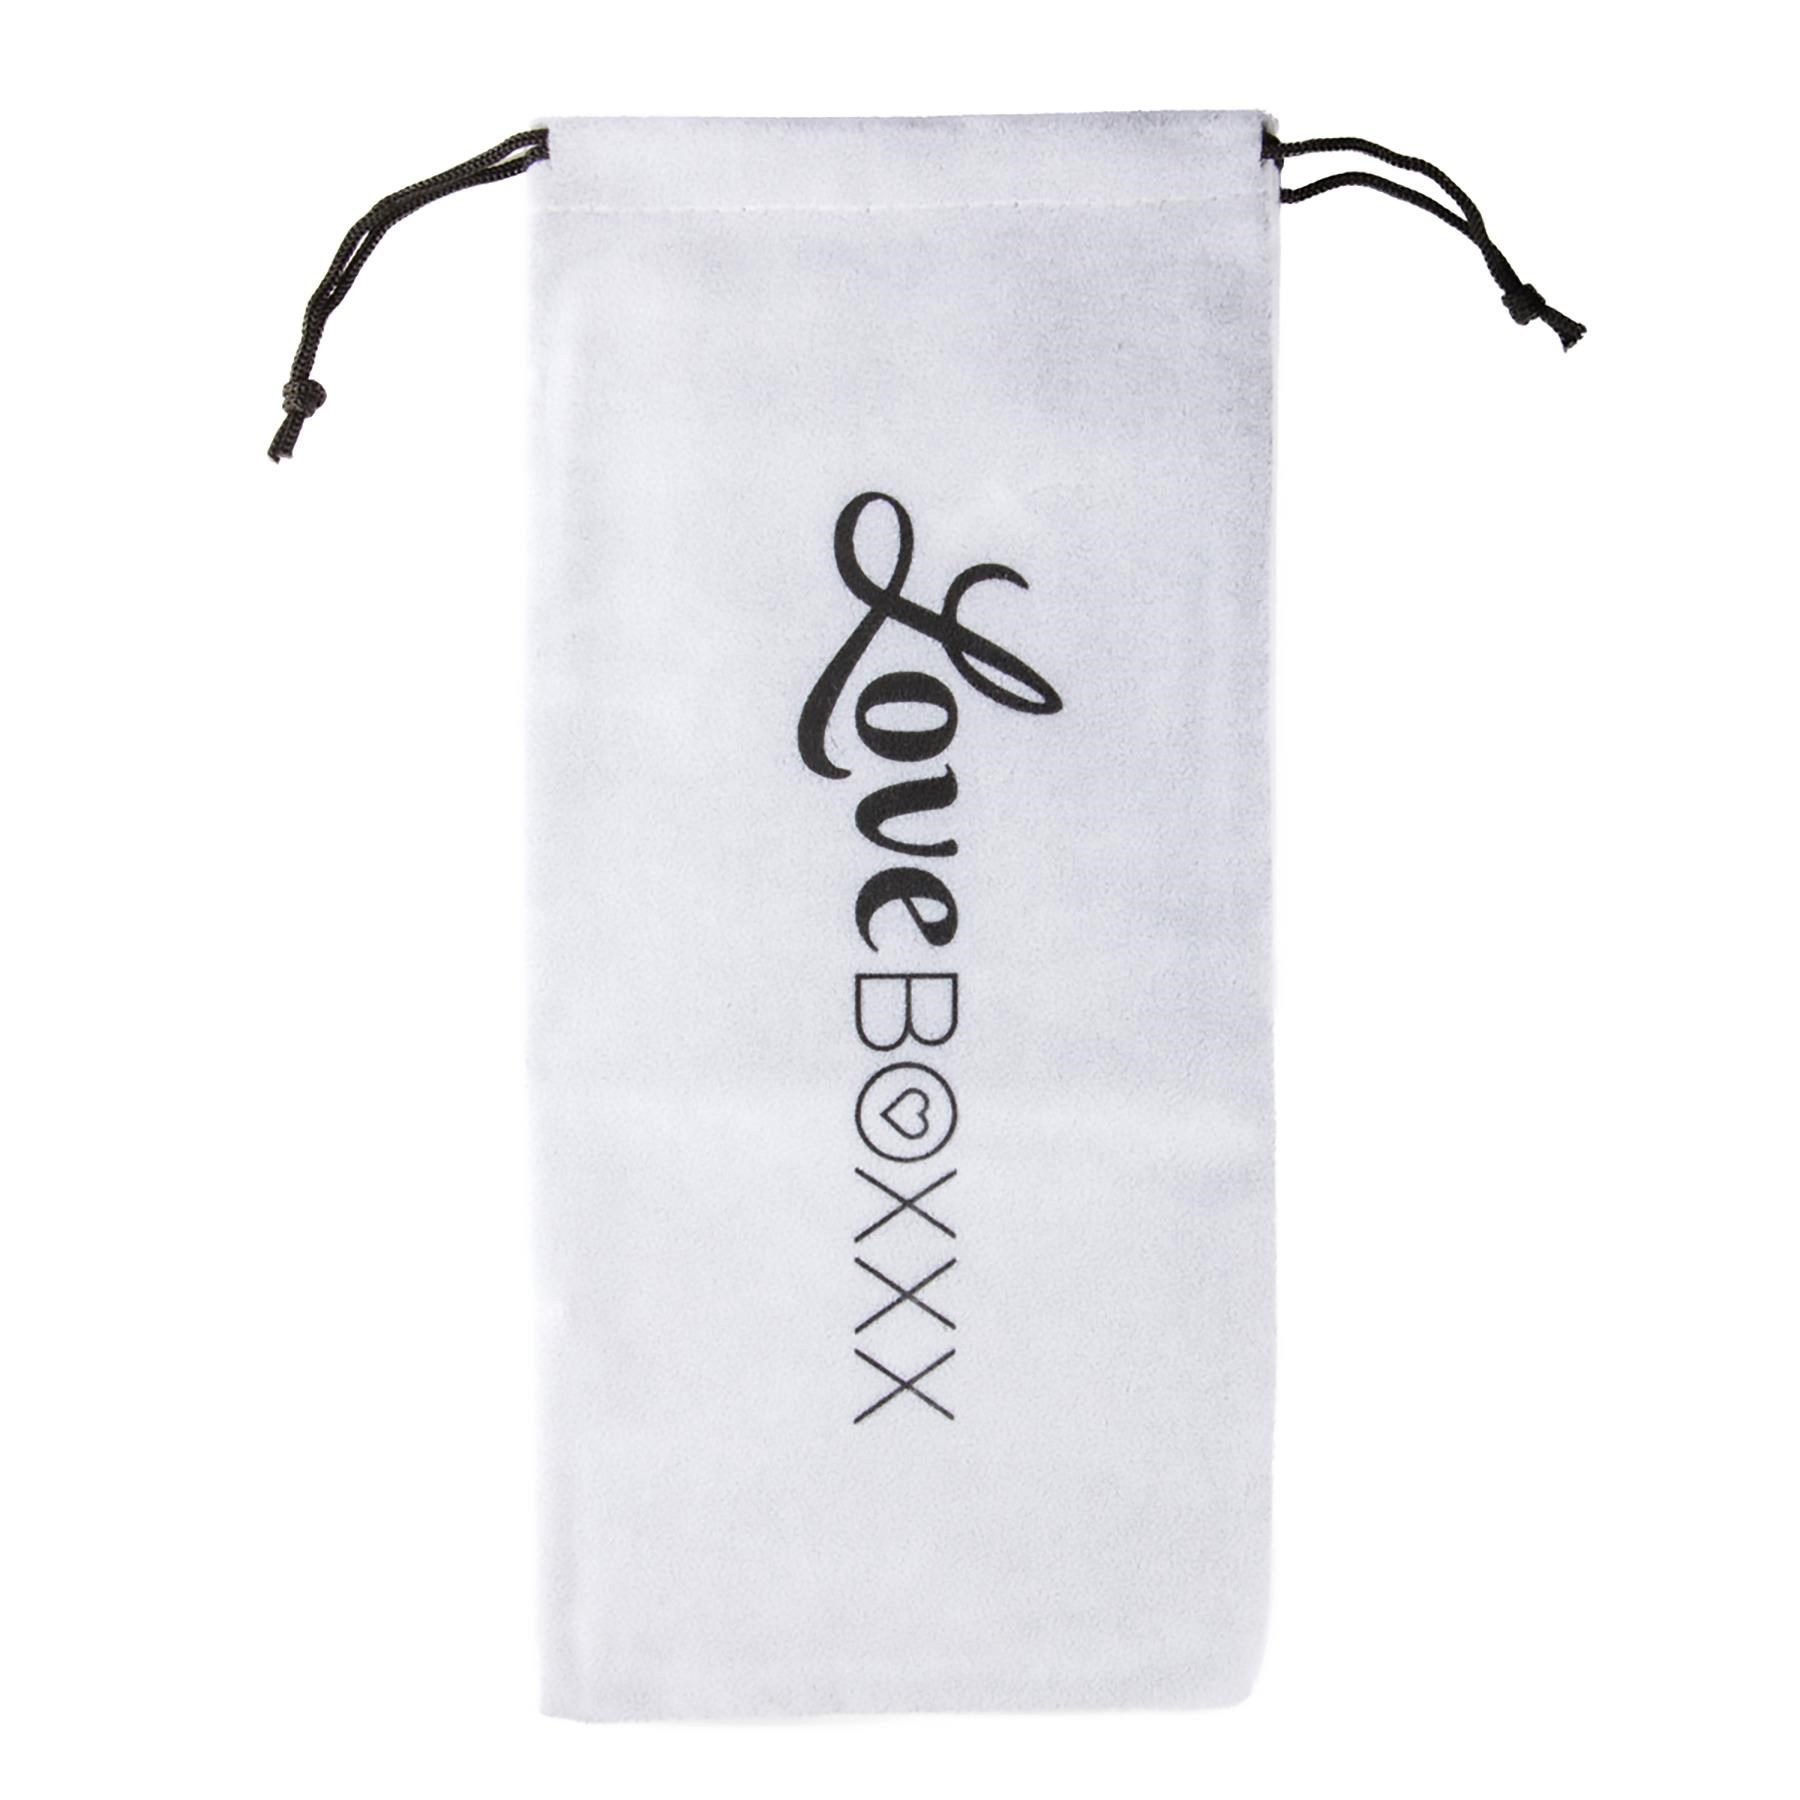 Loveboxxx Solo Gift Set - Storage Bag